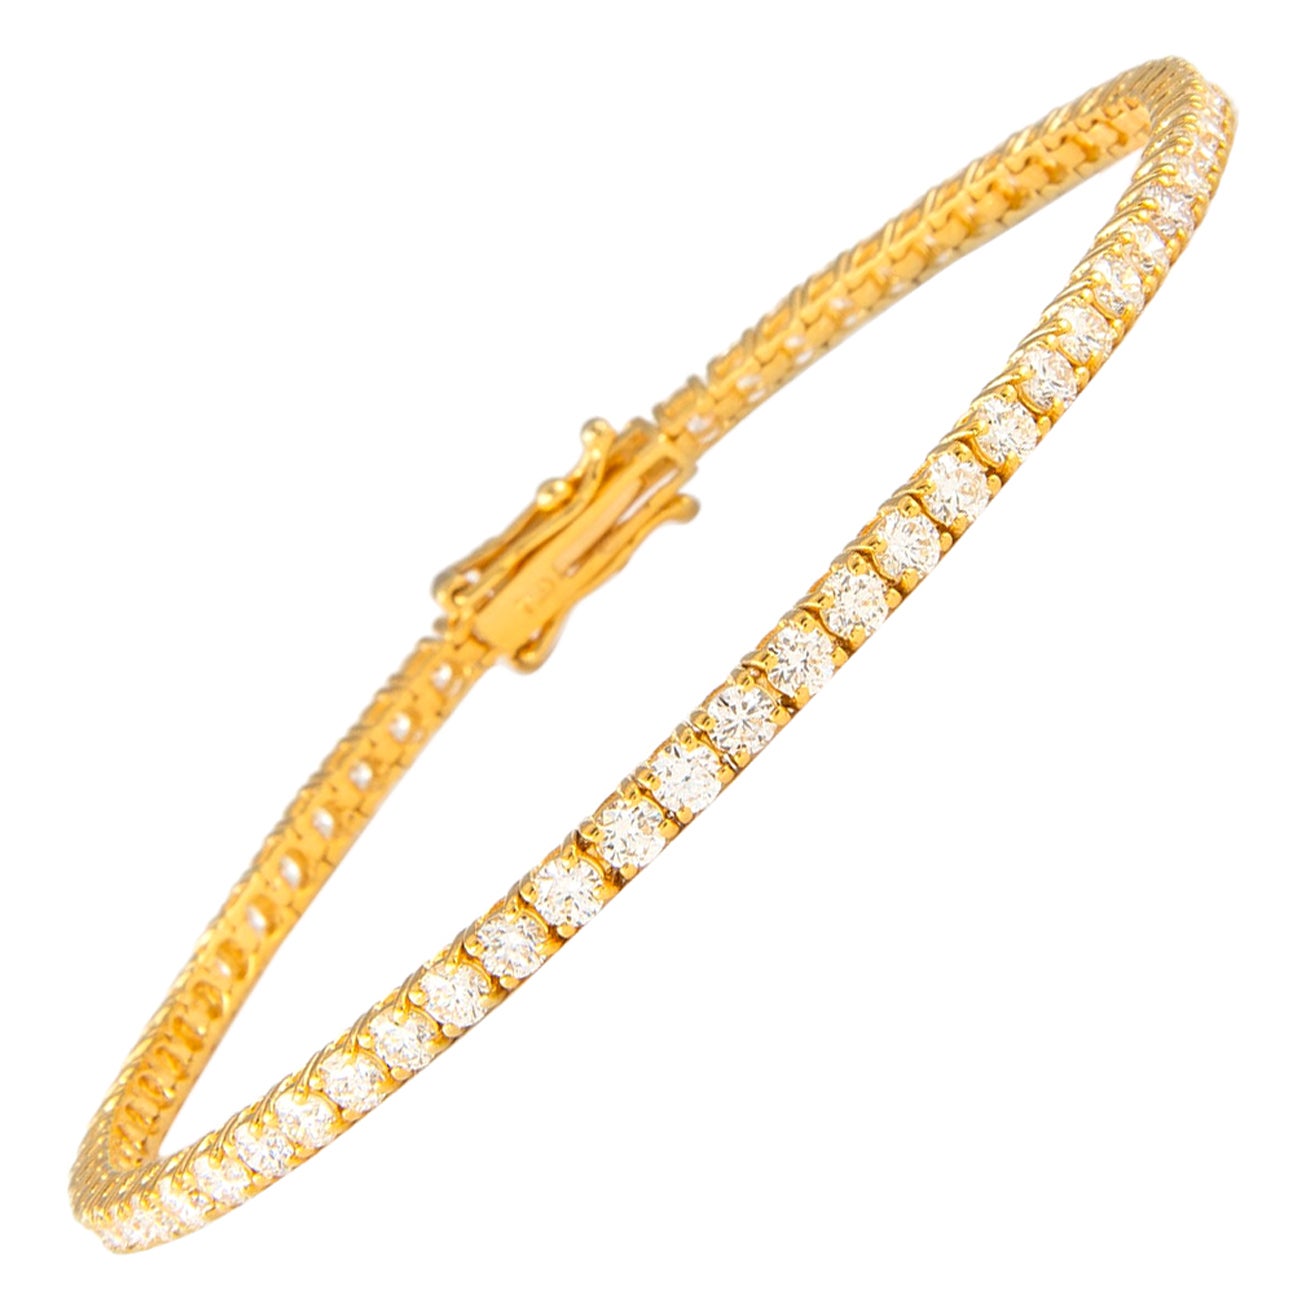 Alexander 3.73 Carats Diamond Tennis Bracelet 18 Karat Yellow Gold